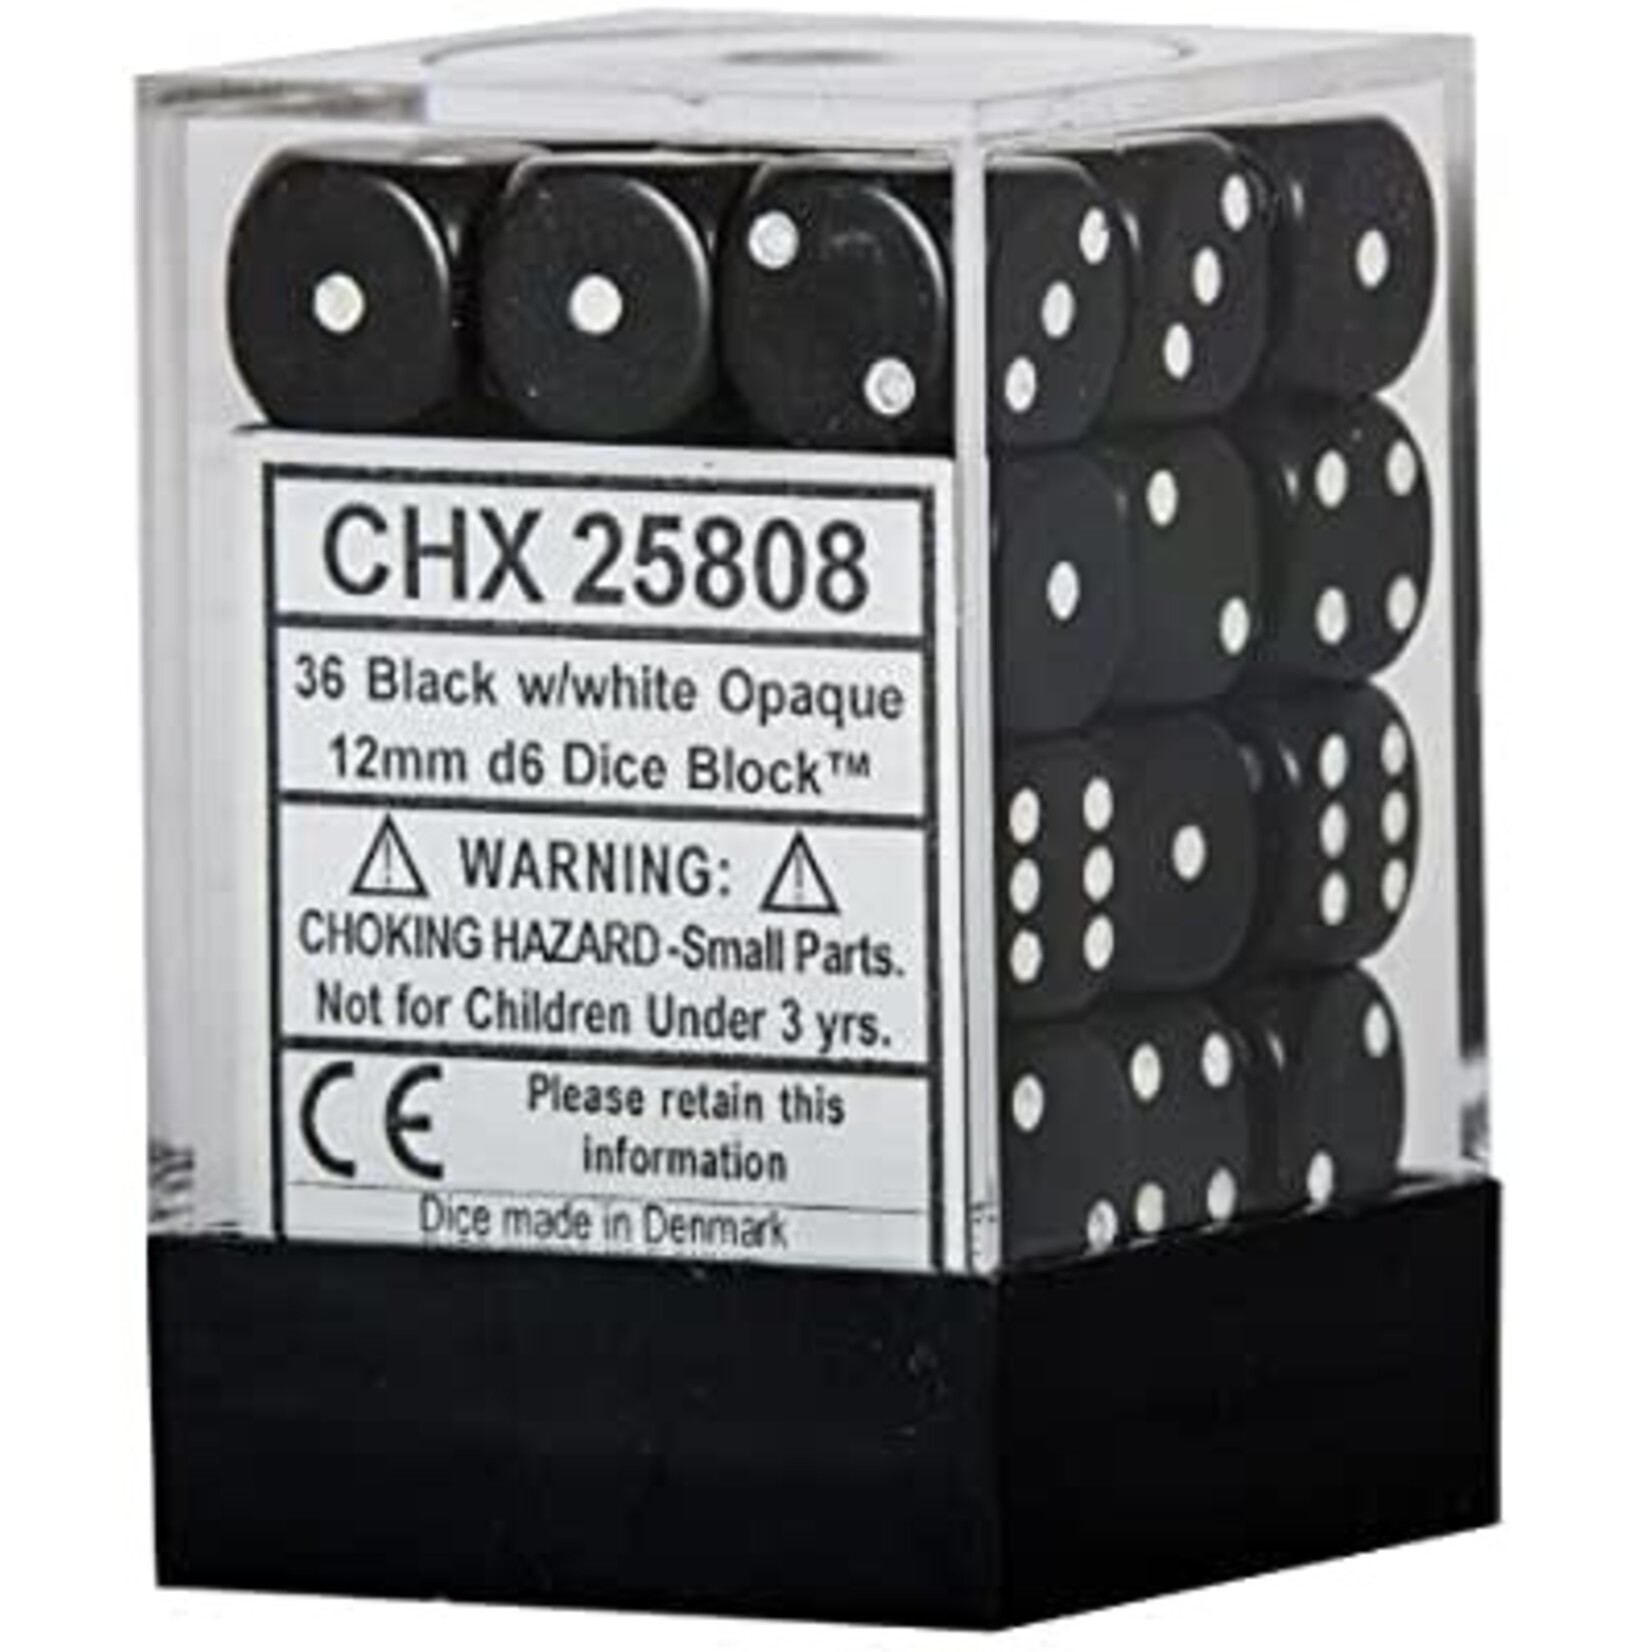 Chessex Opaque Black/white 12mm d6 Dice Block (36 dice)